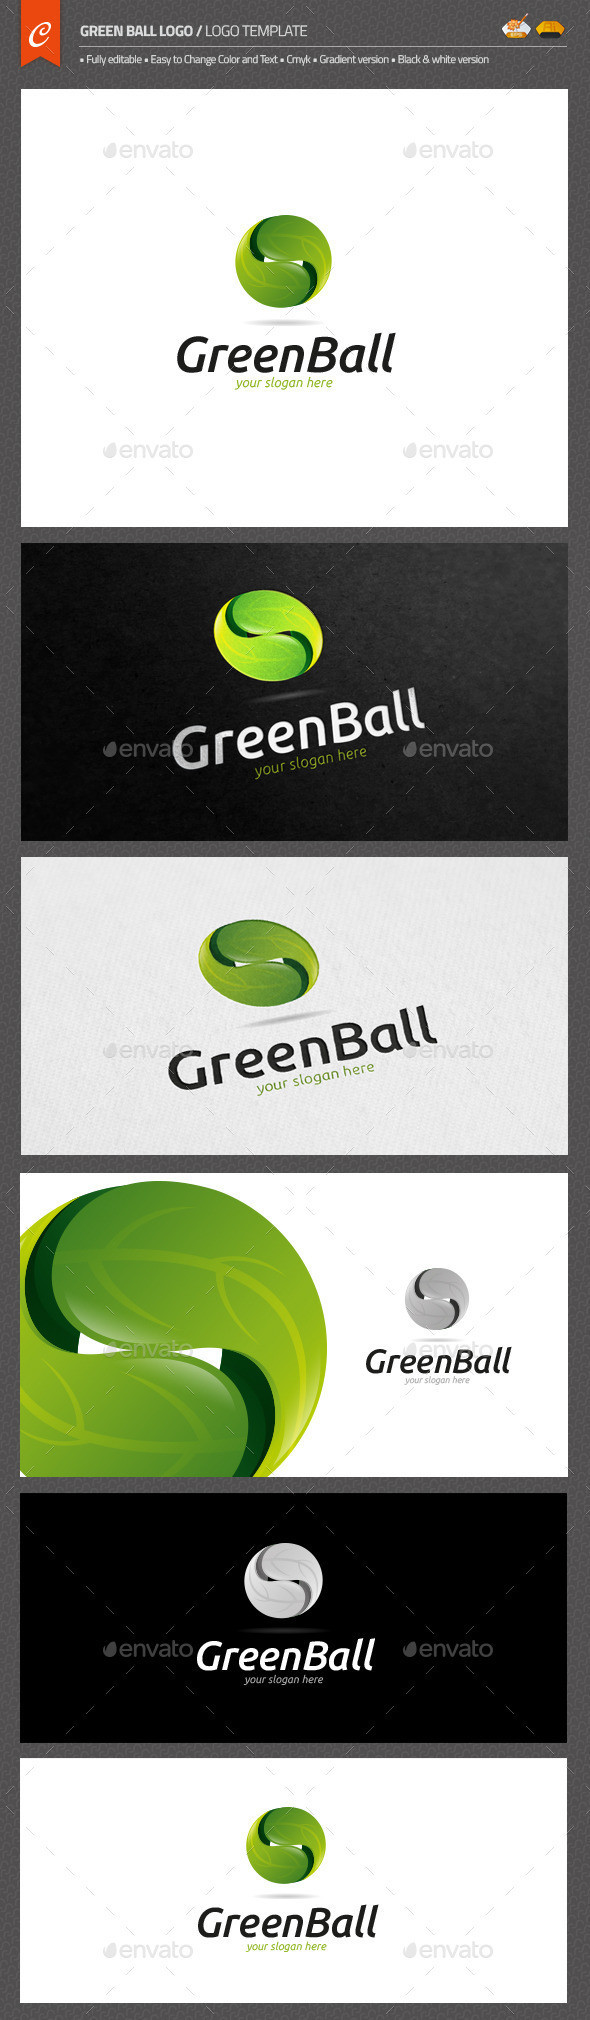 Green ball logo